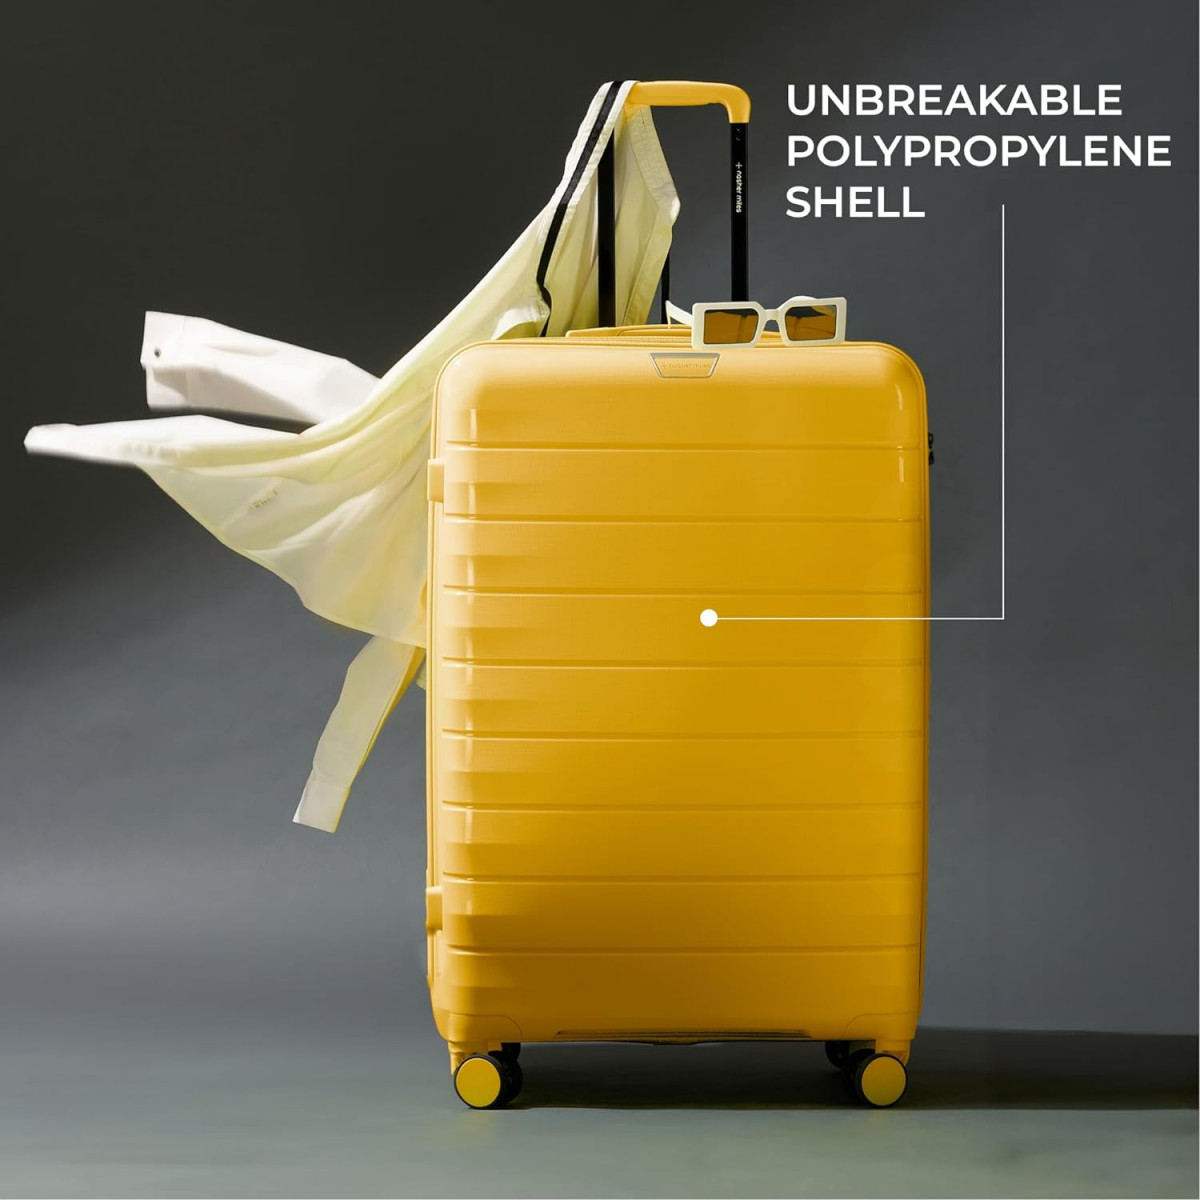 Nasher Miles Vienna Hard-Sided Polypropylene Cabin Luggage Mustard Yellow 20 inch 55cm Trolley Bag